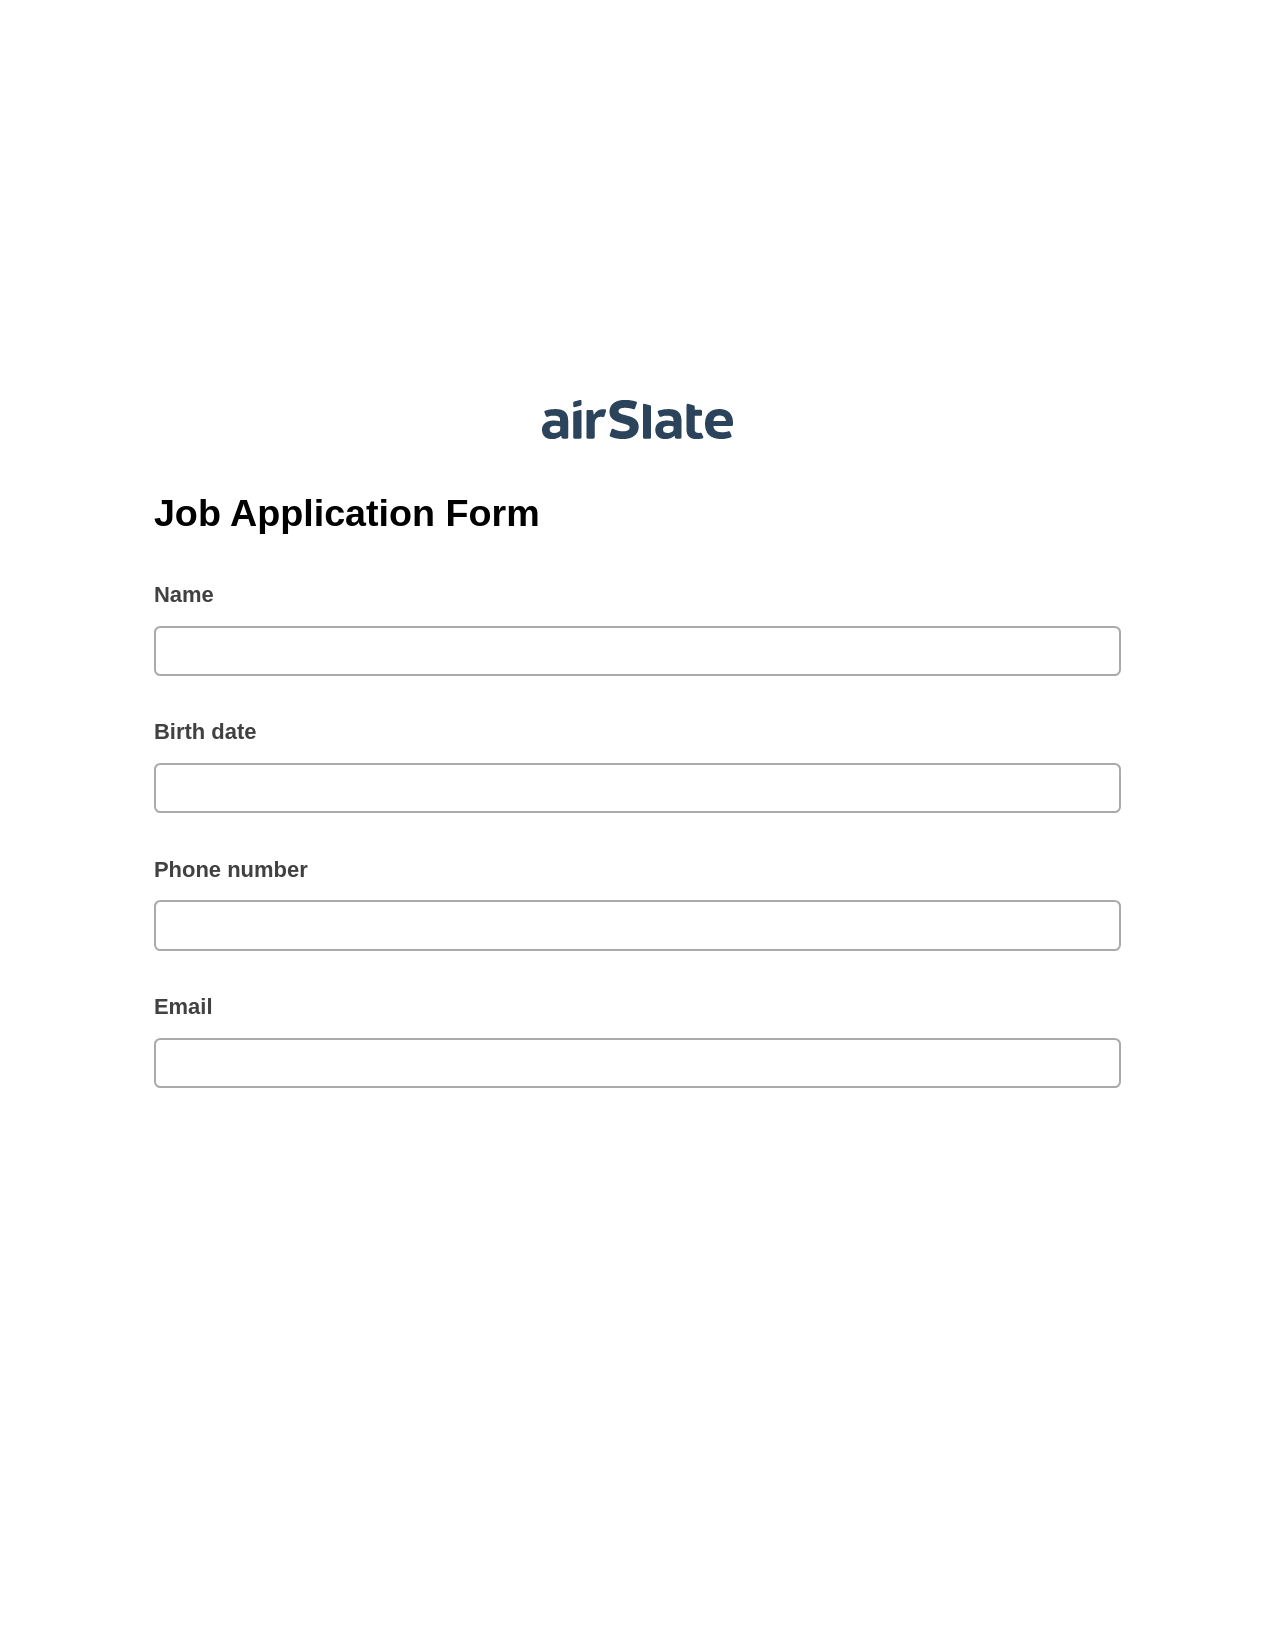 Multirole Job Application Form Pre-fill from CSV File Bot, Google Sheet Two-Way Binding Bot, Export to Smartsheet